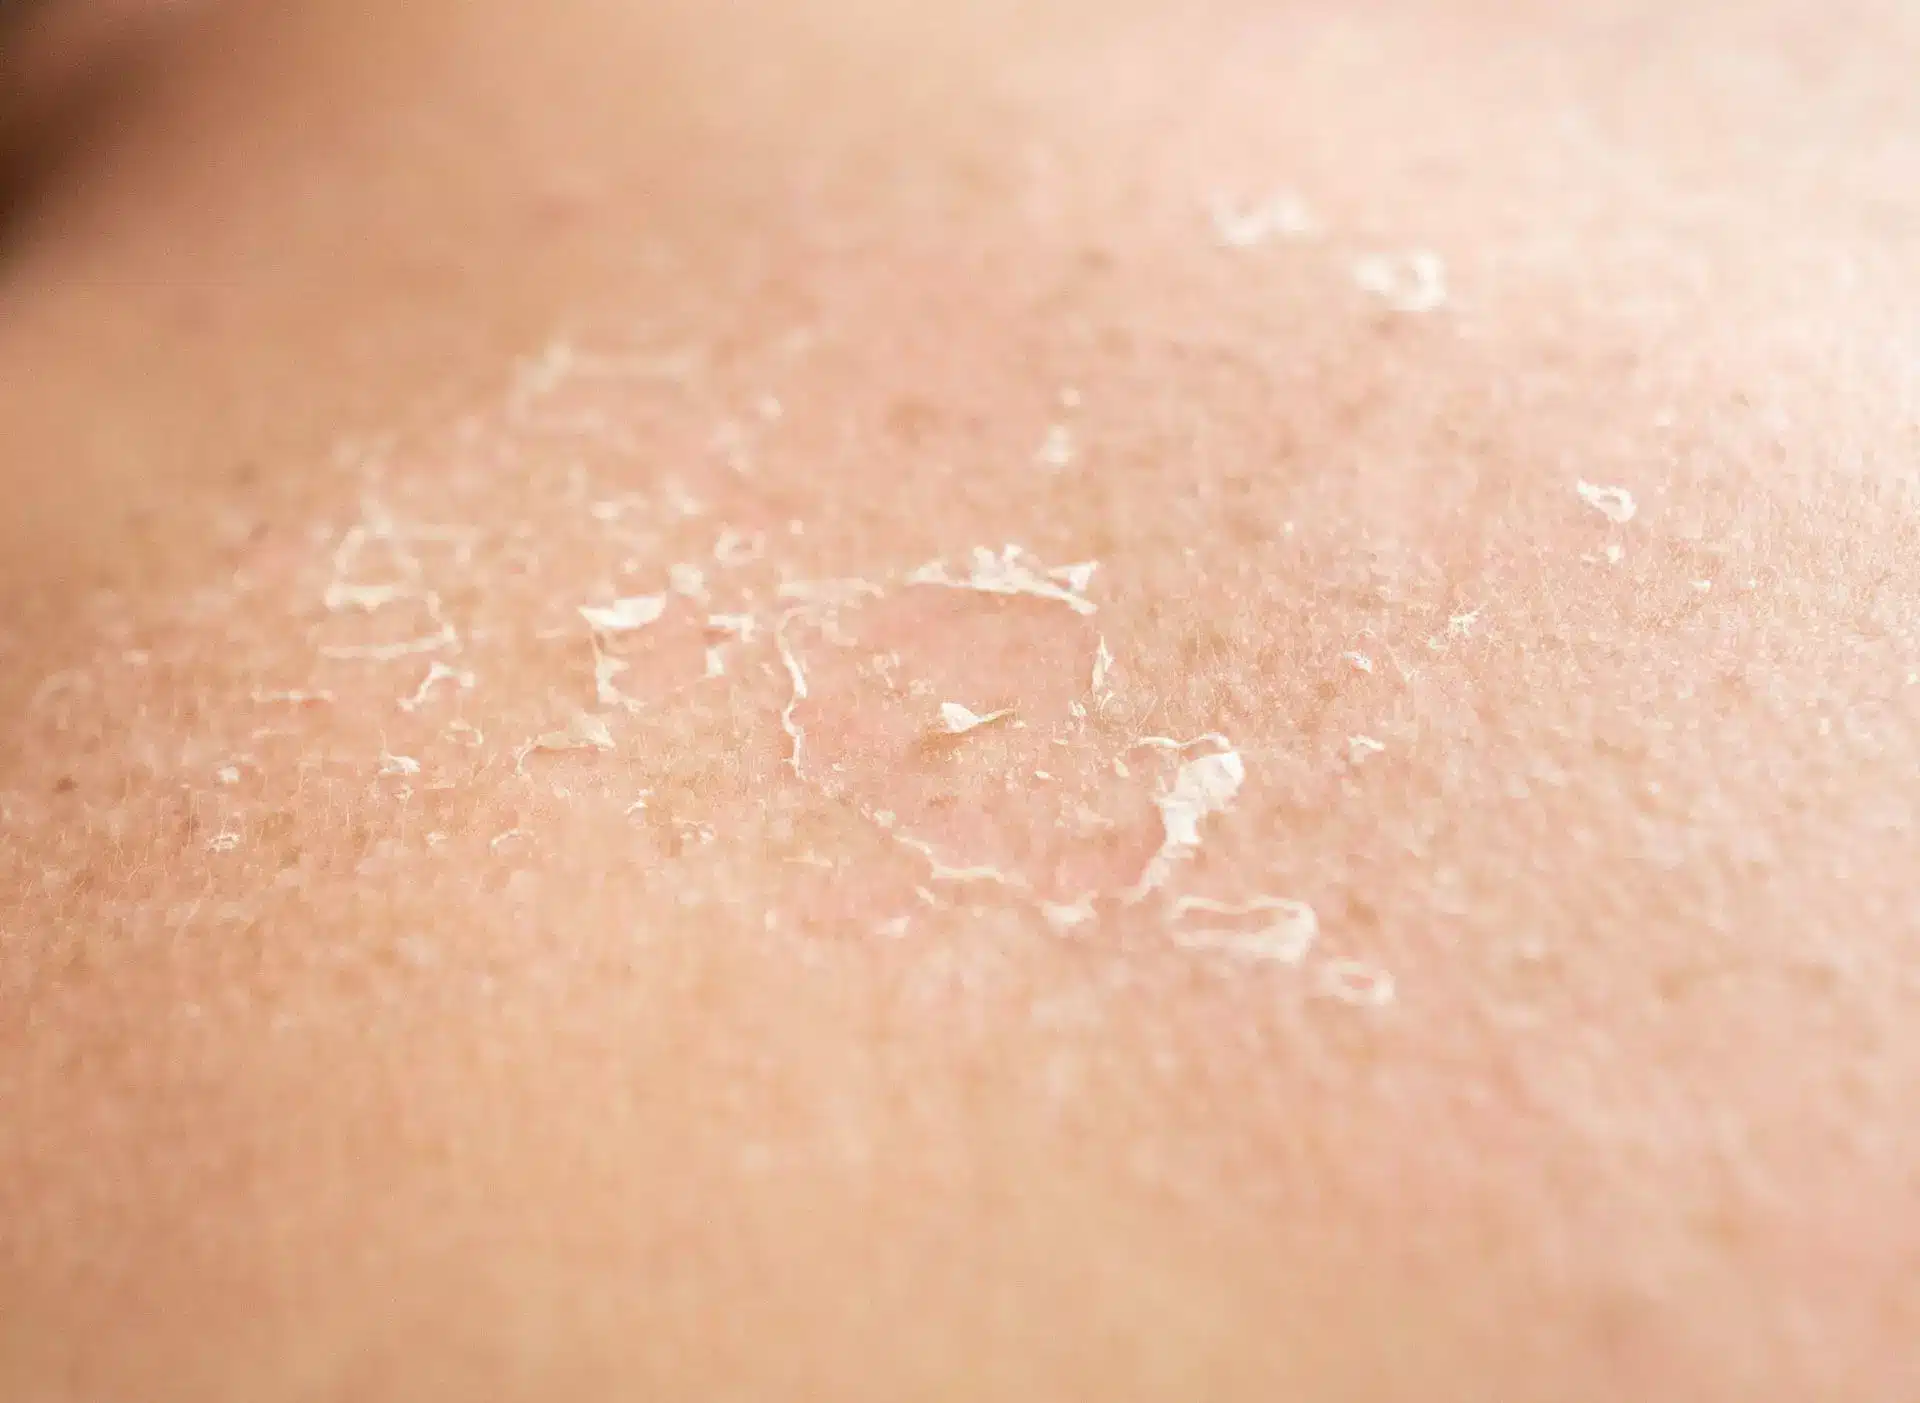 sunburned skin peel in sheets